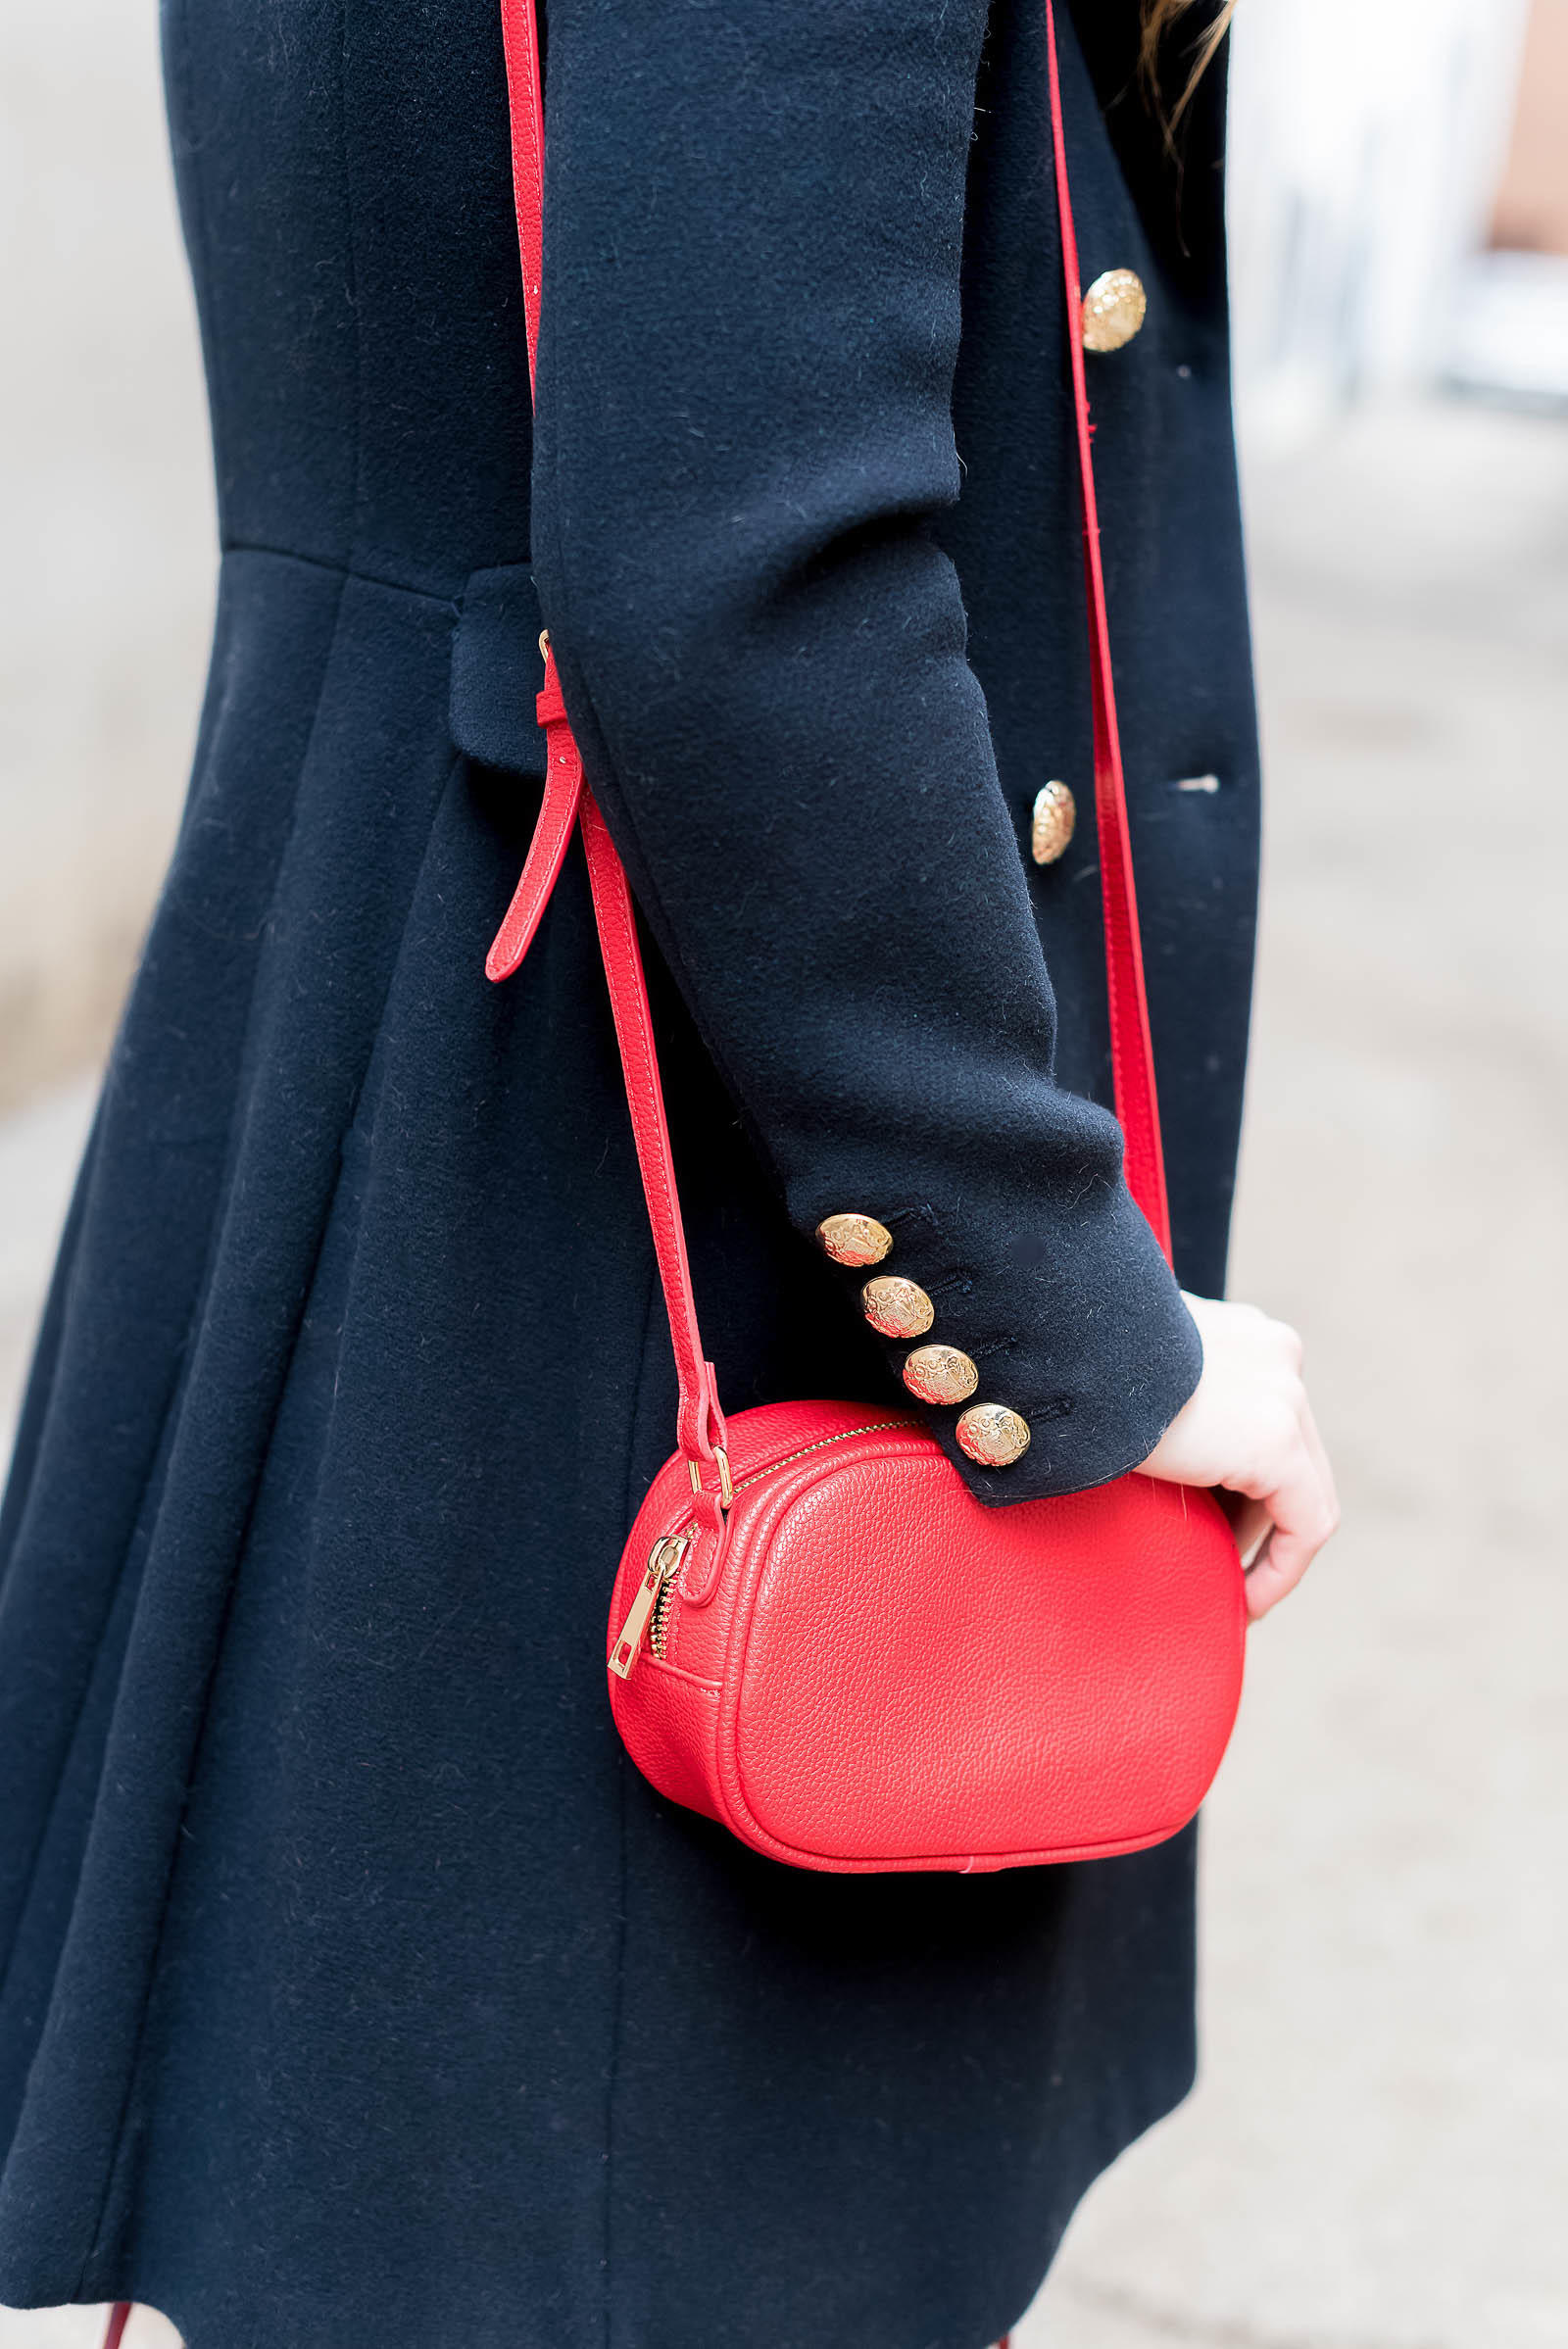 Zara Military Coat Stripe Red Pump Outfit Nautical